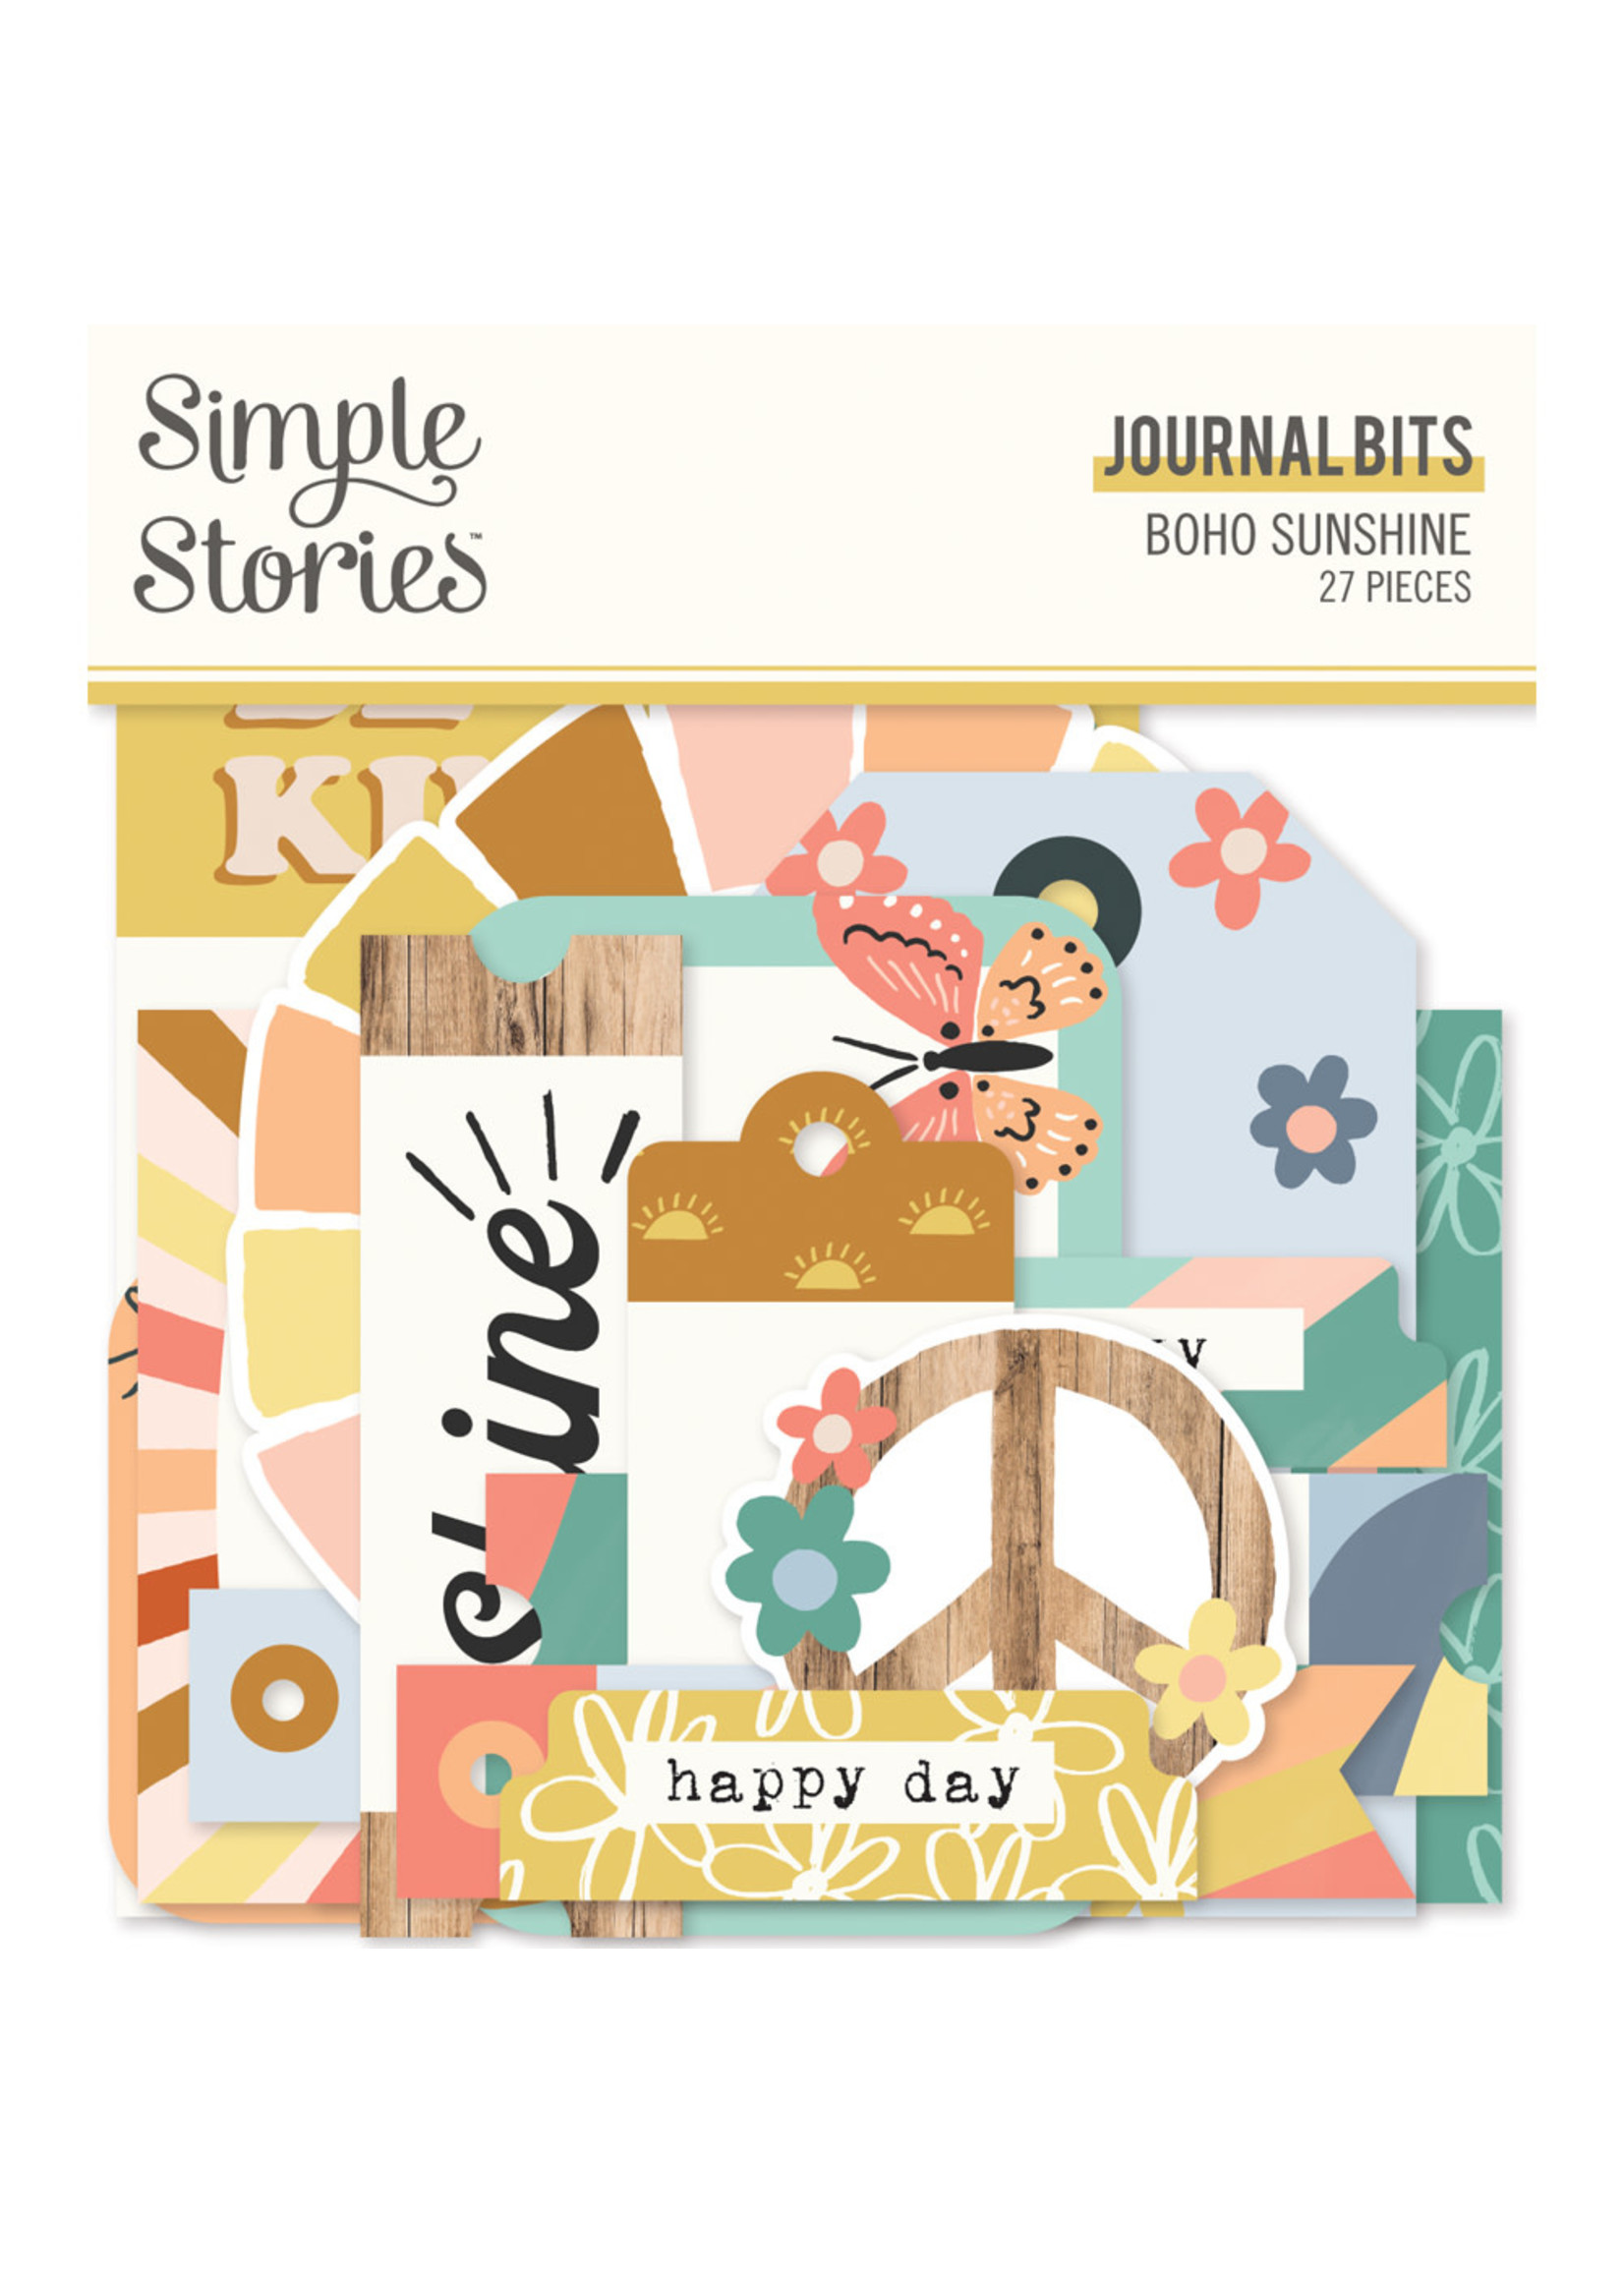 Simple Stories Boho Sunshine - Journal Bits & Pieces